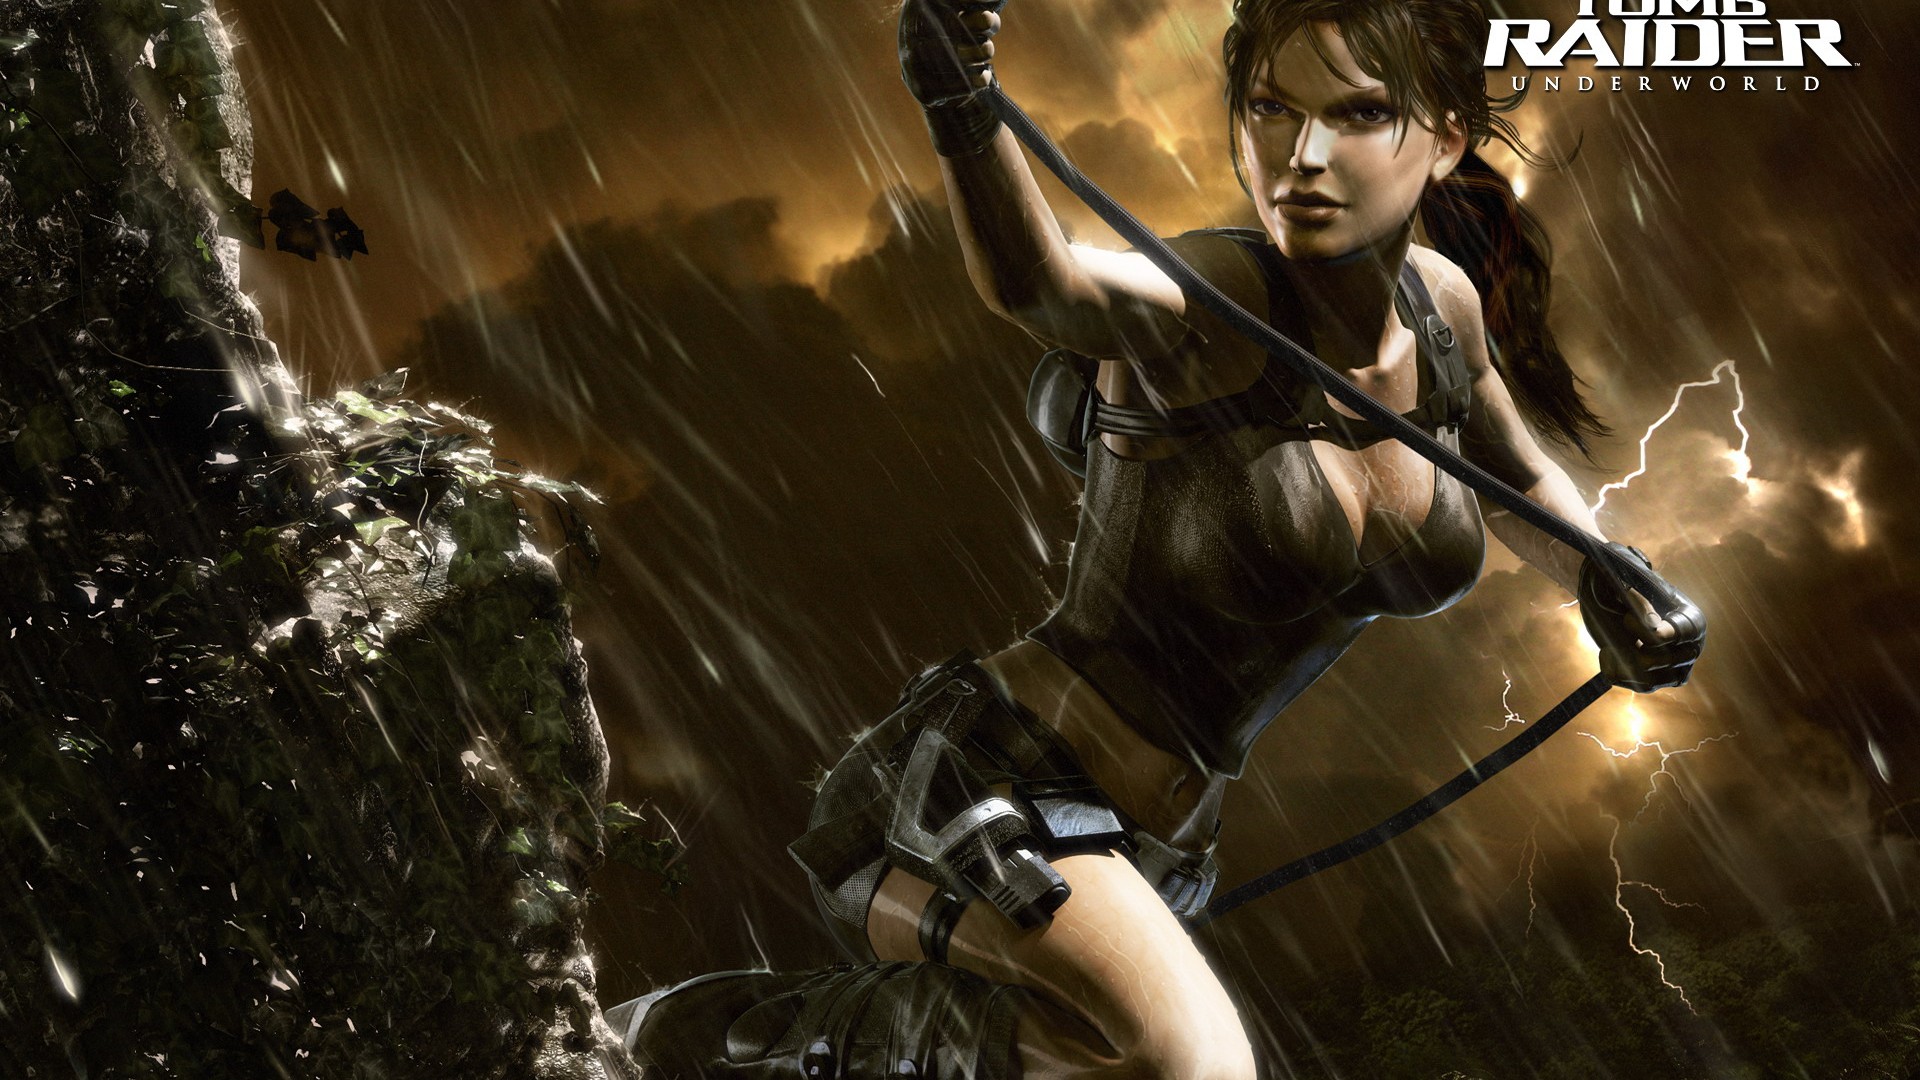 Lara Croft Tomb Raider Underworld 8 #4 - 1920x1080